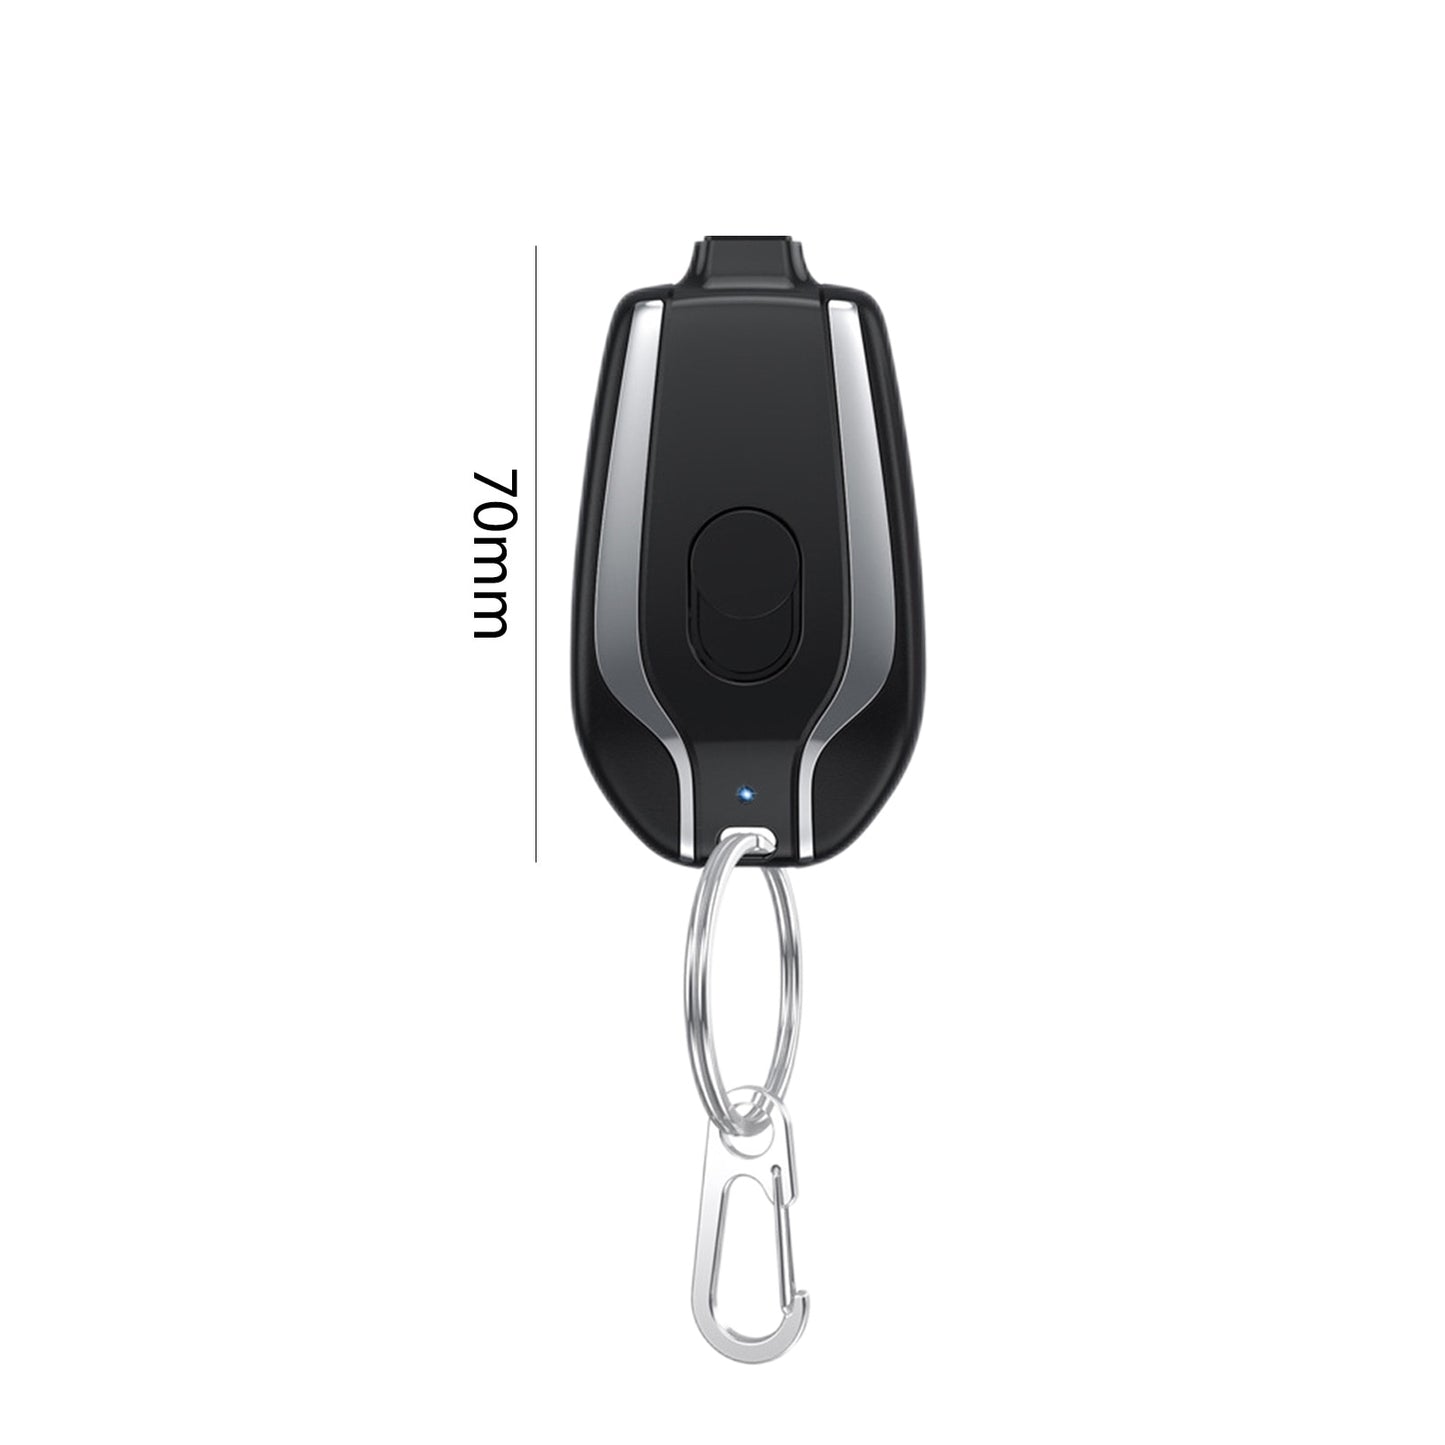 Portable Keychain Charger - Keychain Powerbank - 1500 MAH.